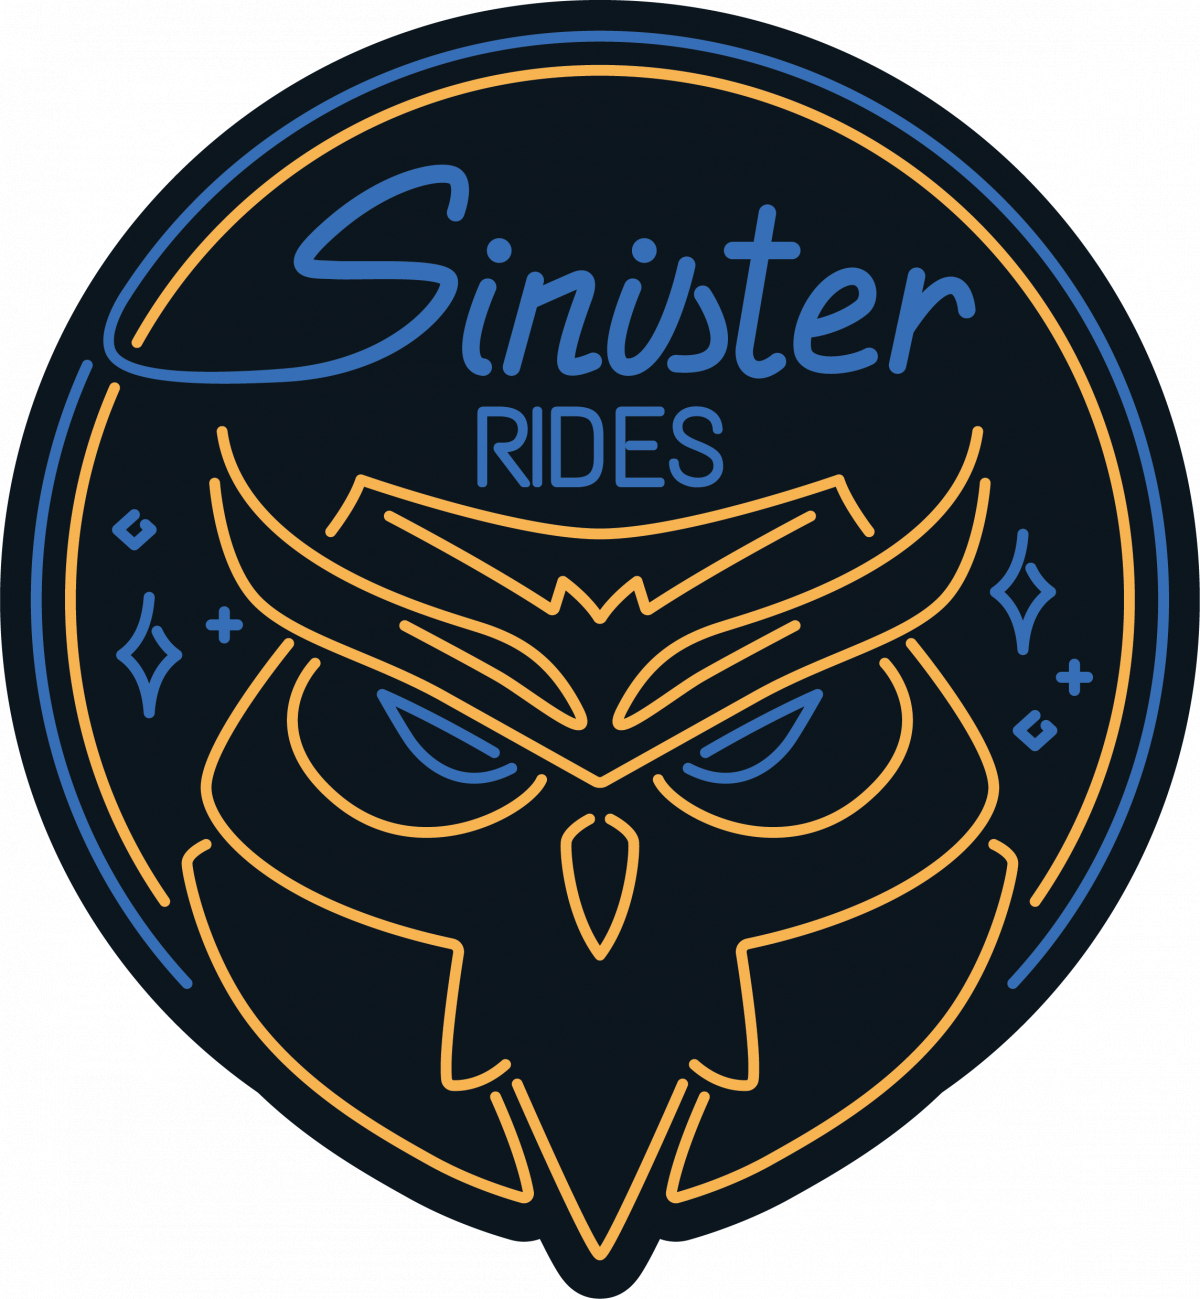 Sinister Night Rides